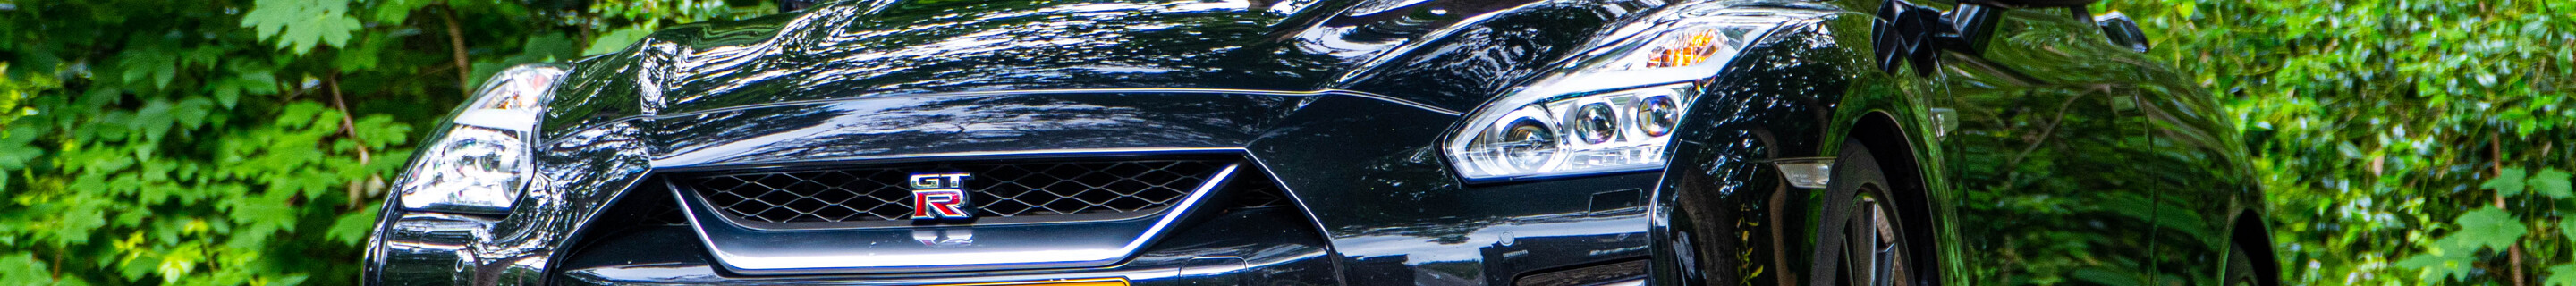 Nissan GT-R 2019 Prestige Edition